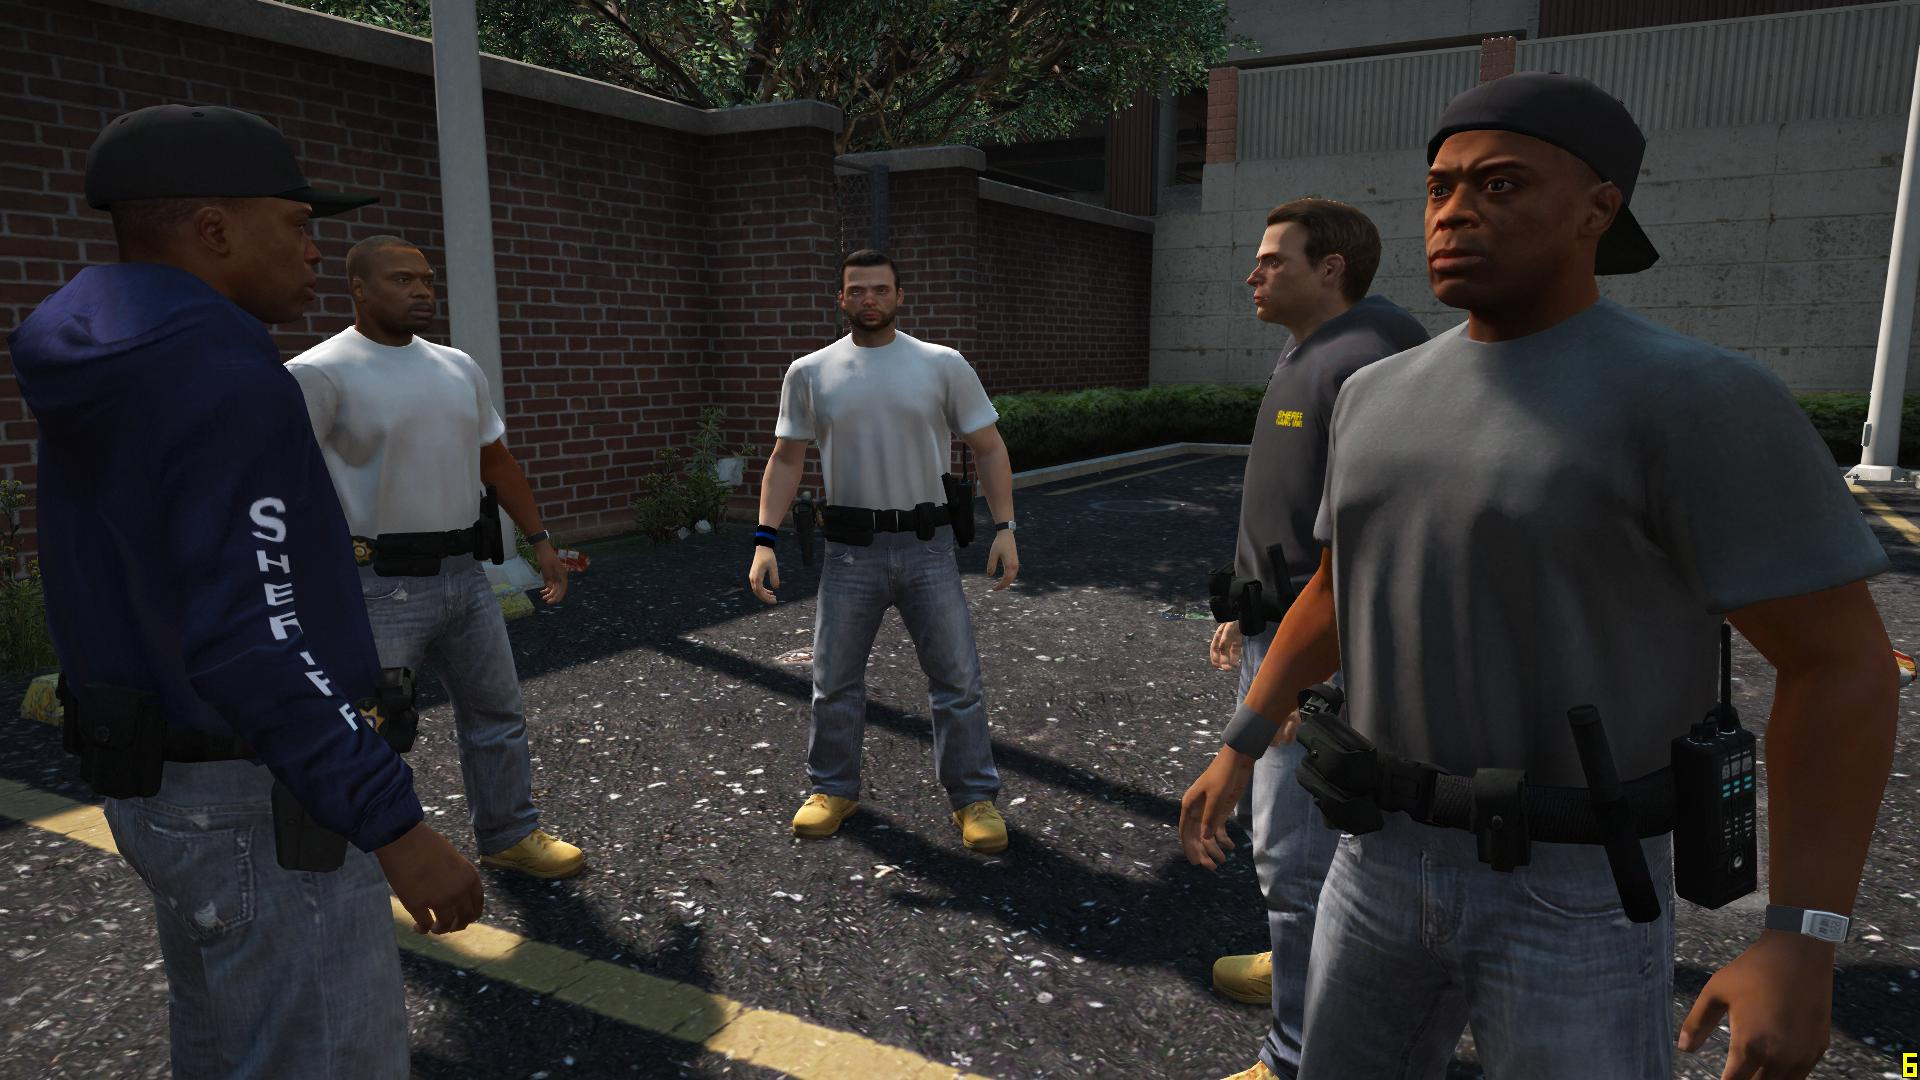 Lasd gang Unit. Los Angeles Sheriff Department gangs. Gang Unit. Jump out boys lasd. Guy gang